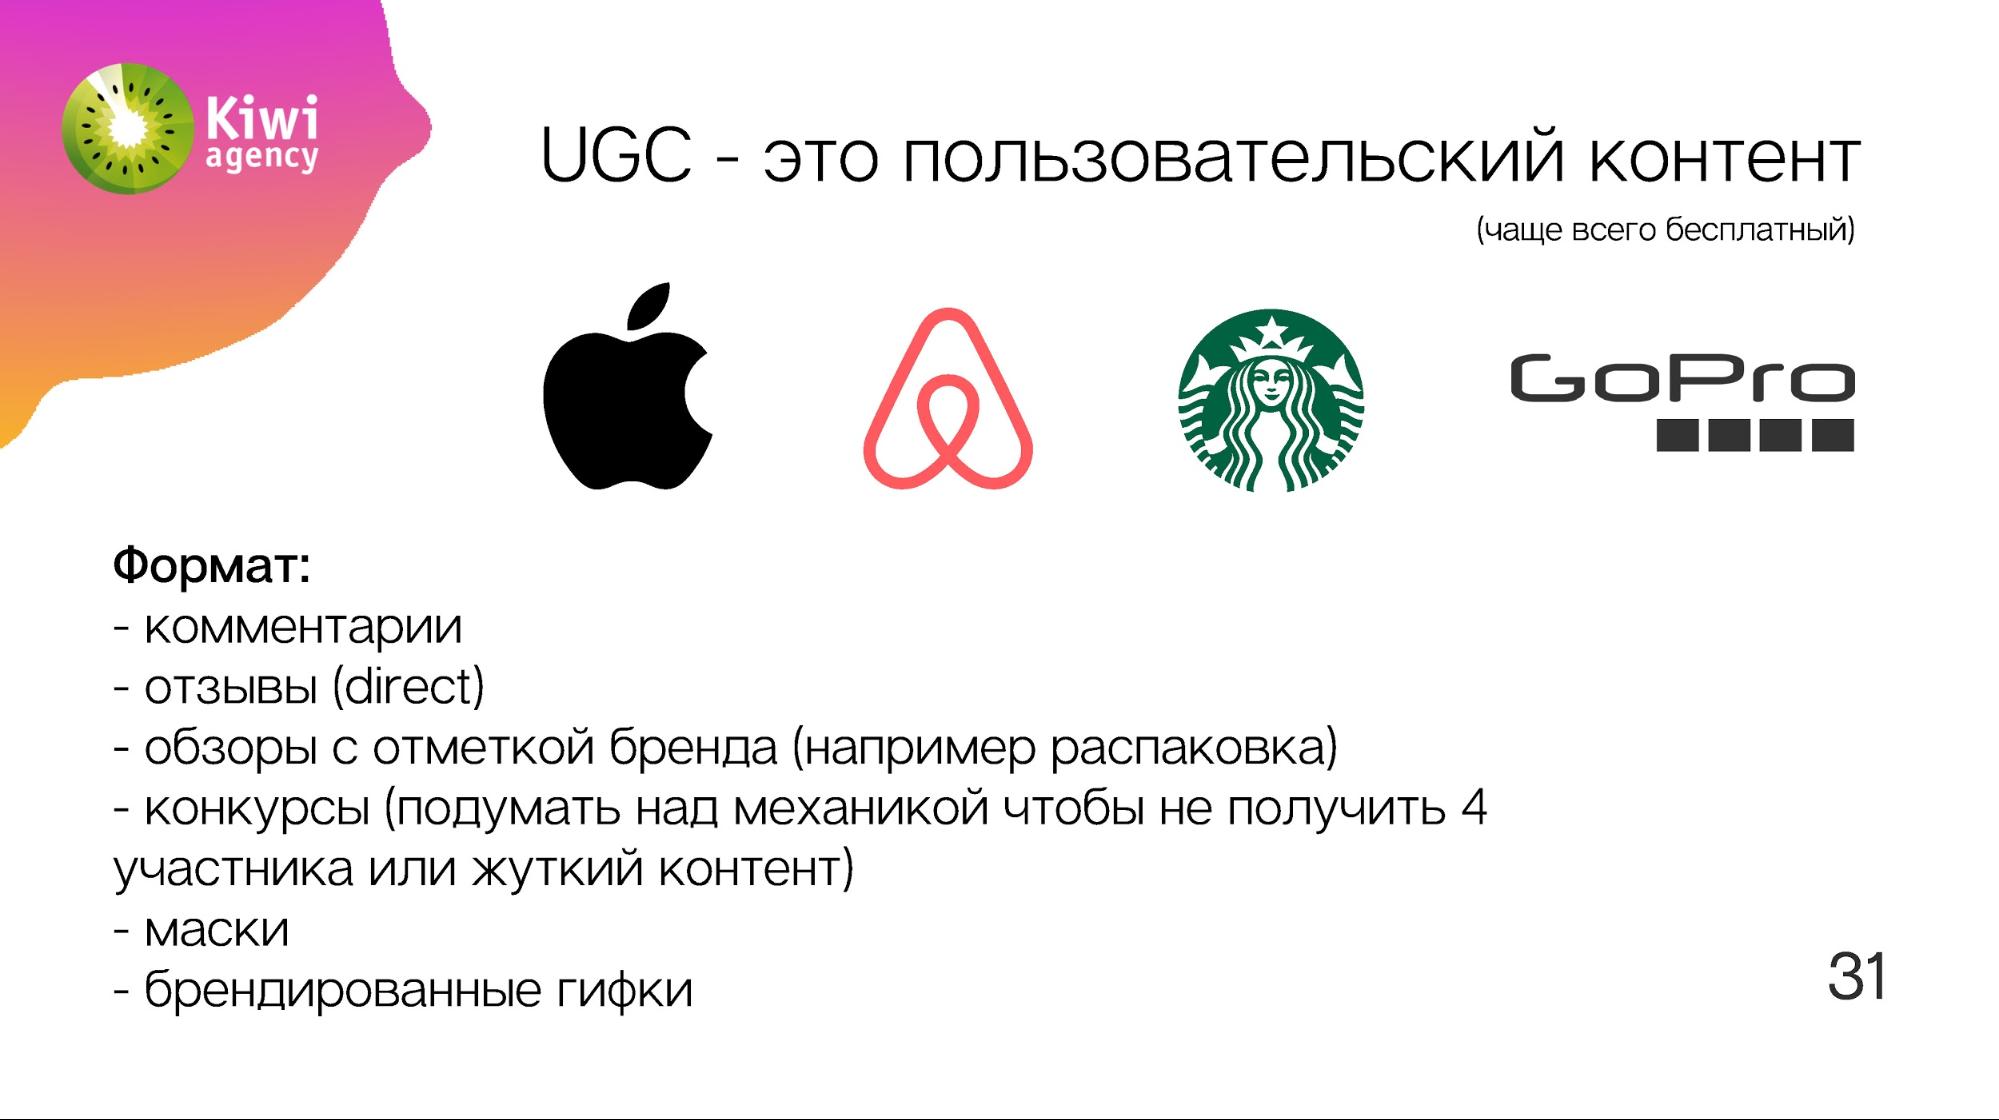 Apple, AirBnB, Starbucks, GoPro активно используют в своих аккаунтах UGC